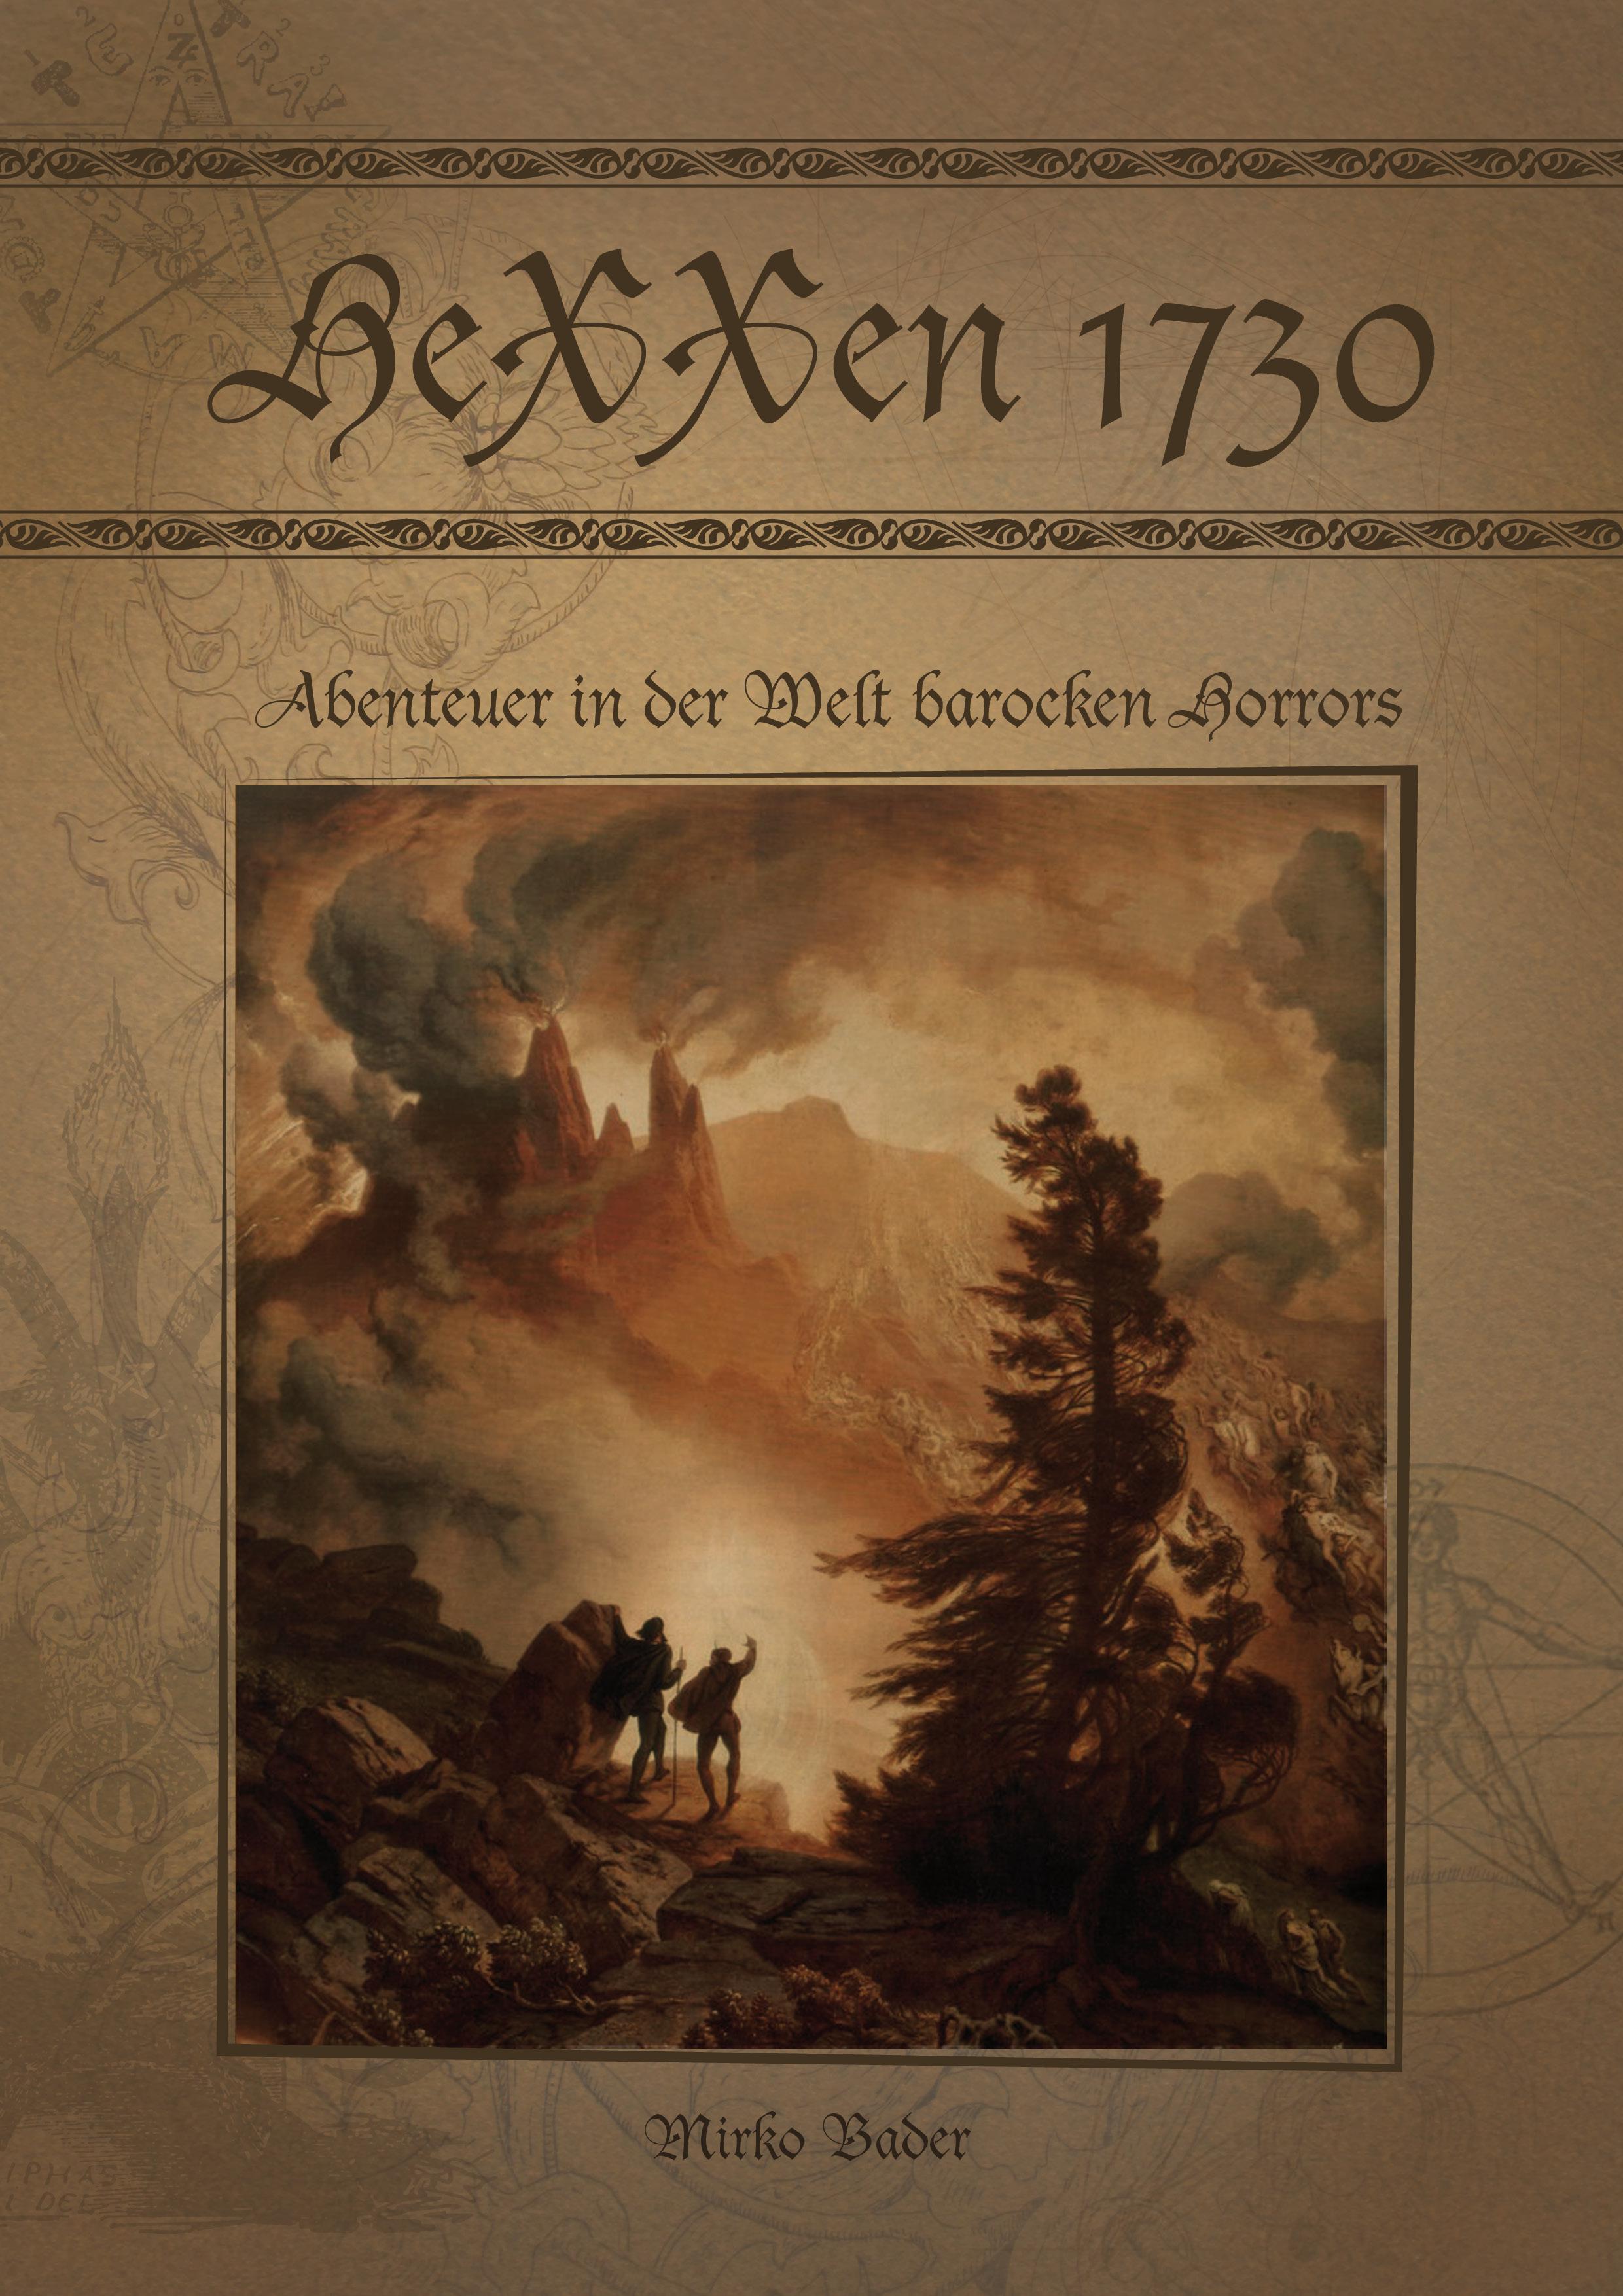 HeXXen 1730 - Devils never die